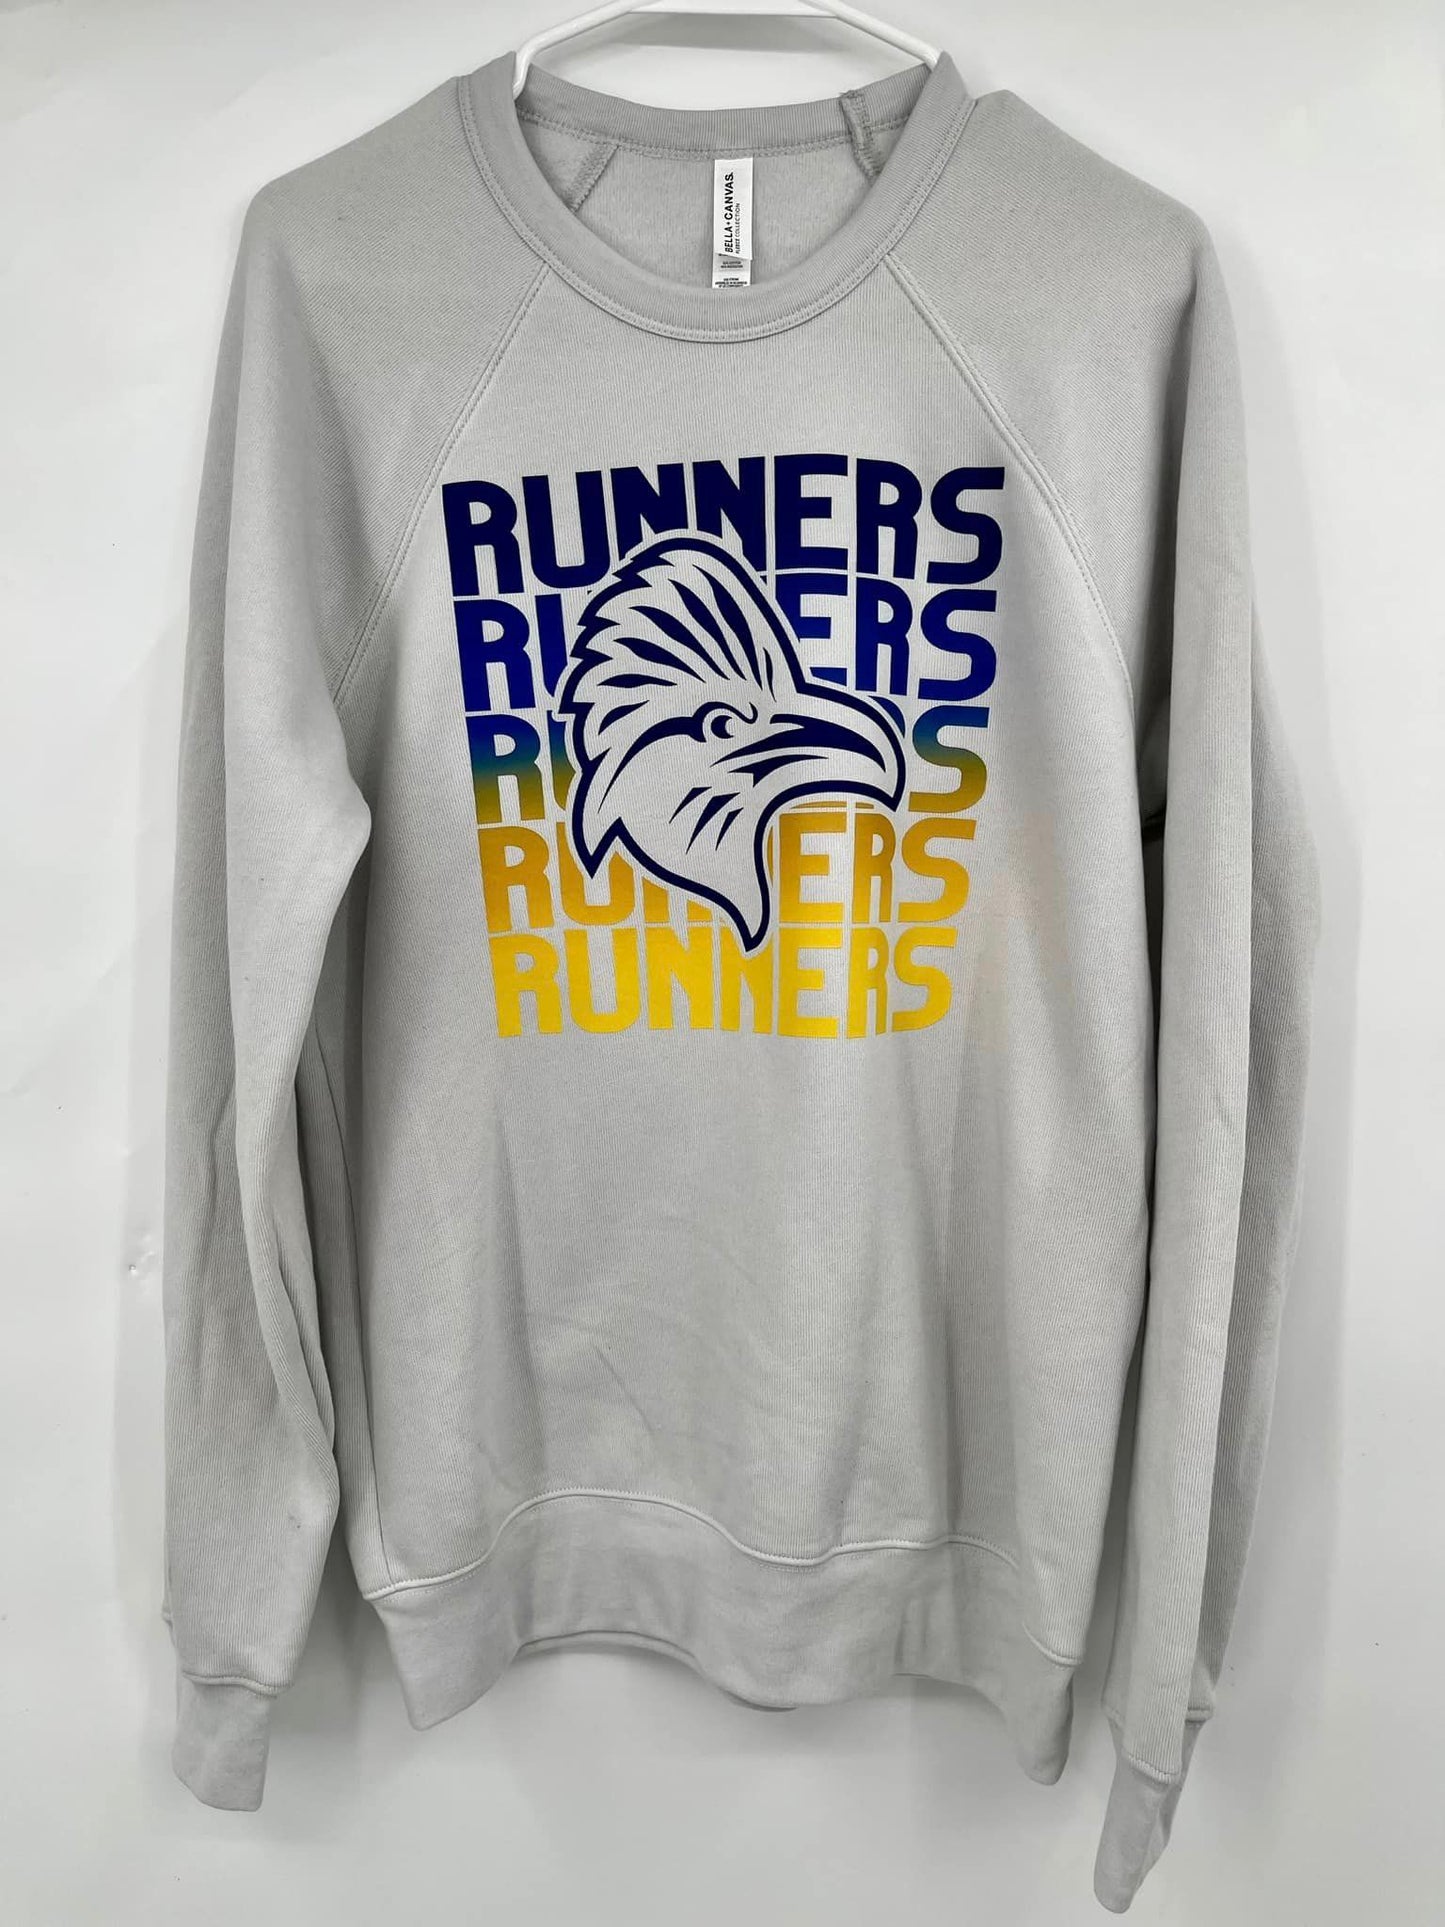 Ombre Runners, Bella & Canvas sweatshirt in multiple colors